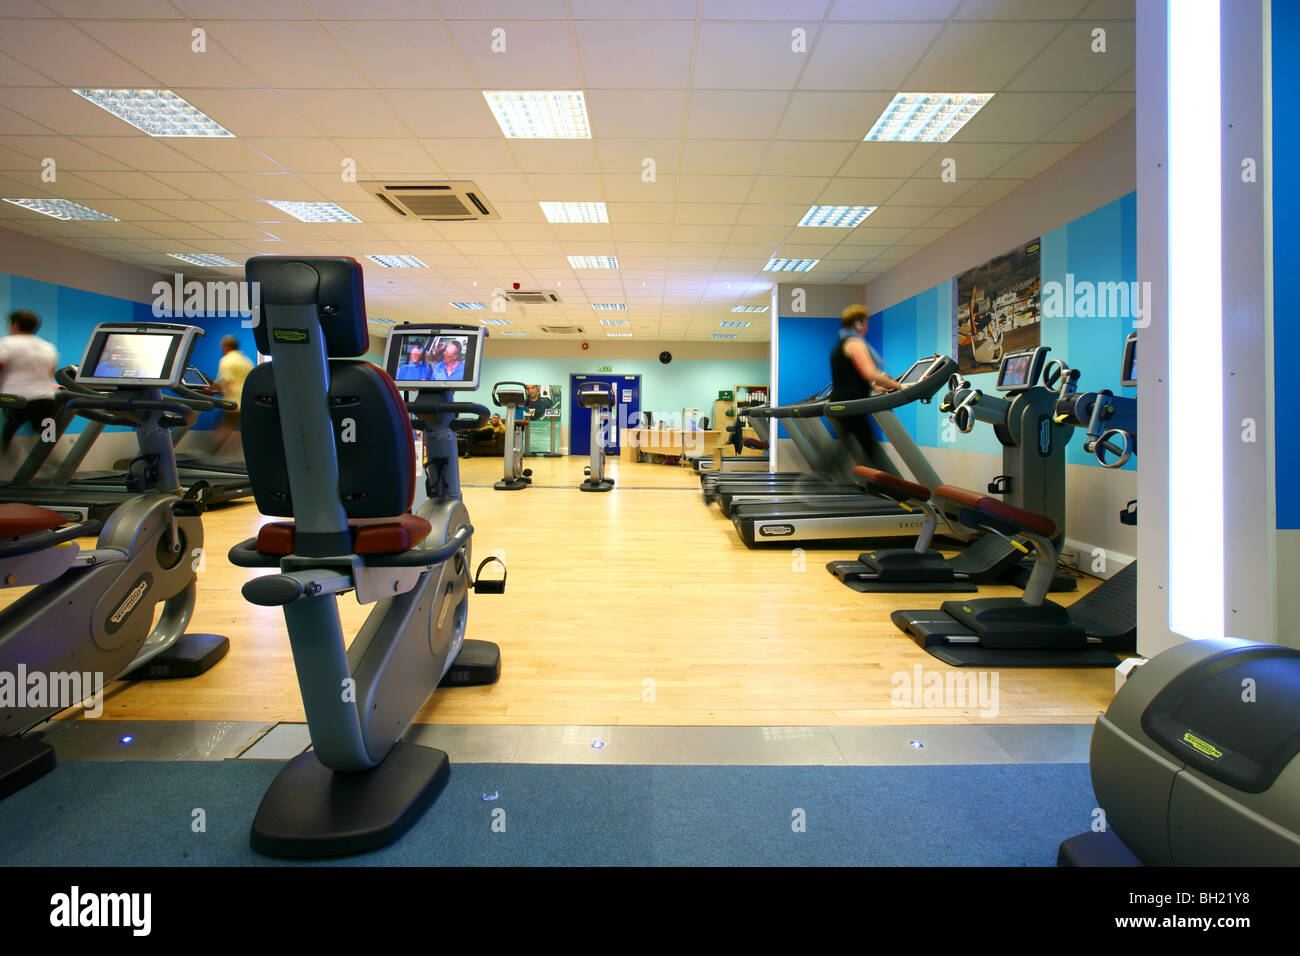 Moderno gimnasio equipado con diversos aparatos de ejercicios Foto de stock